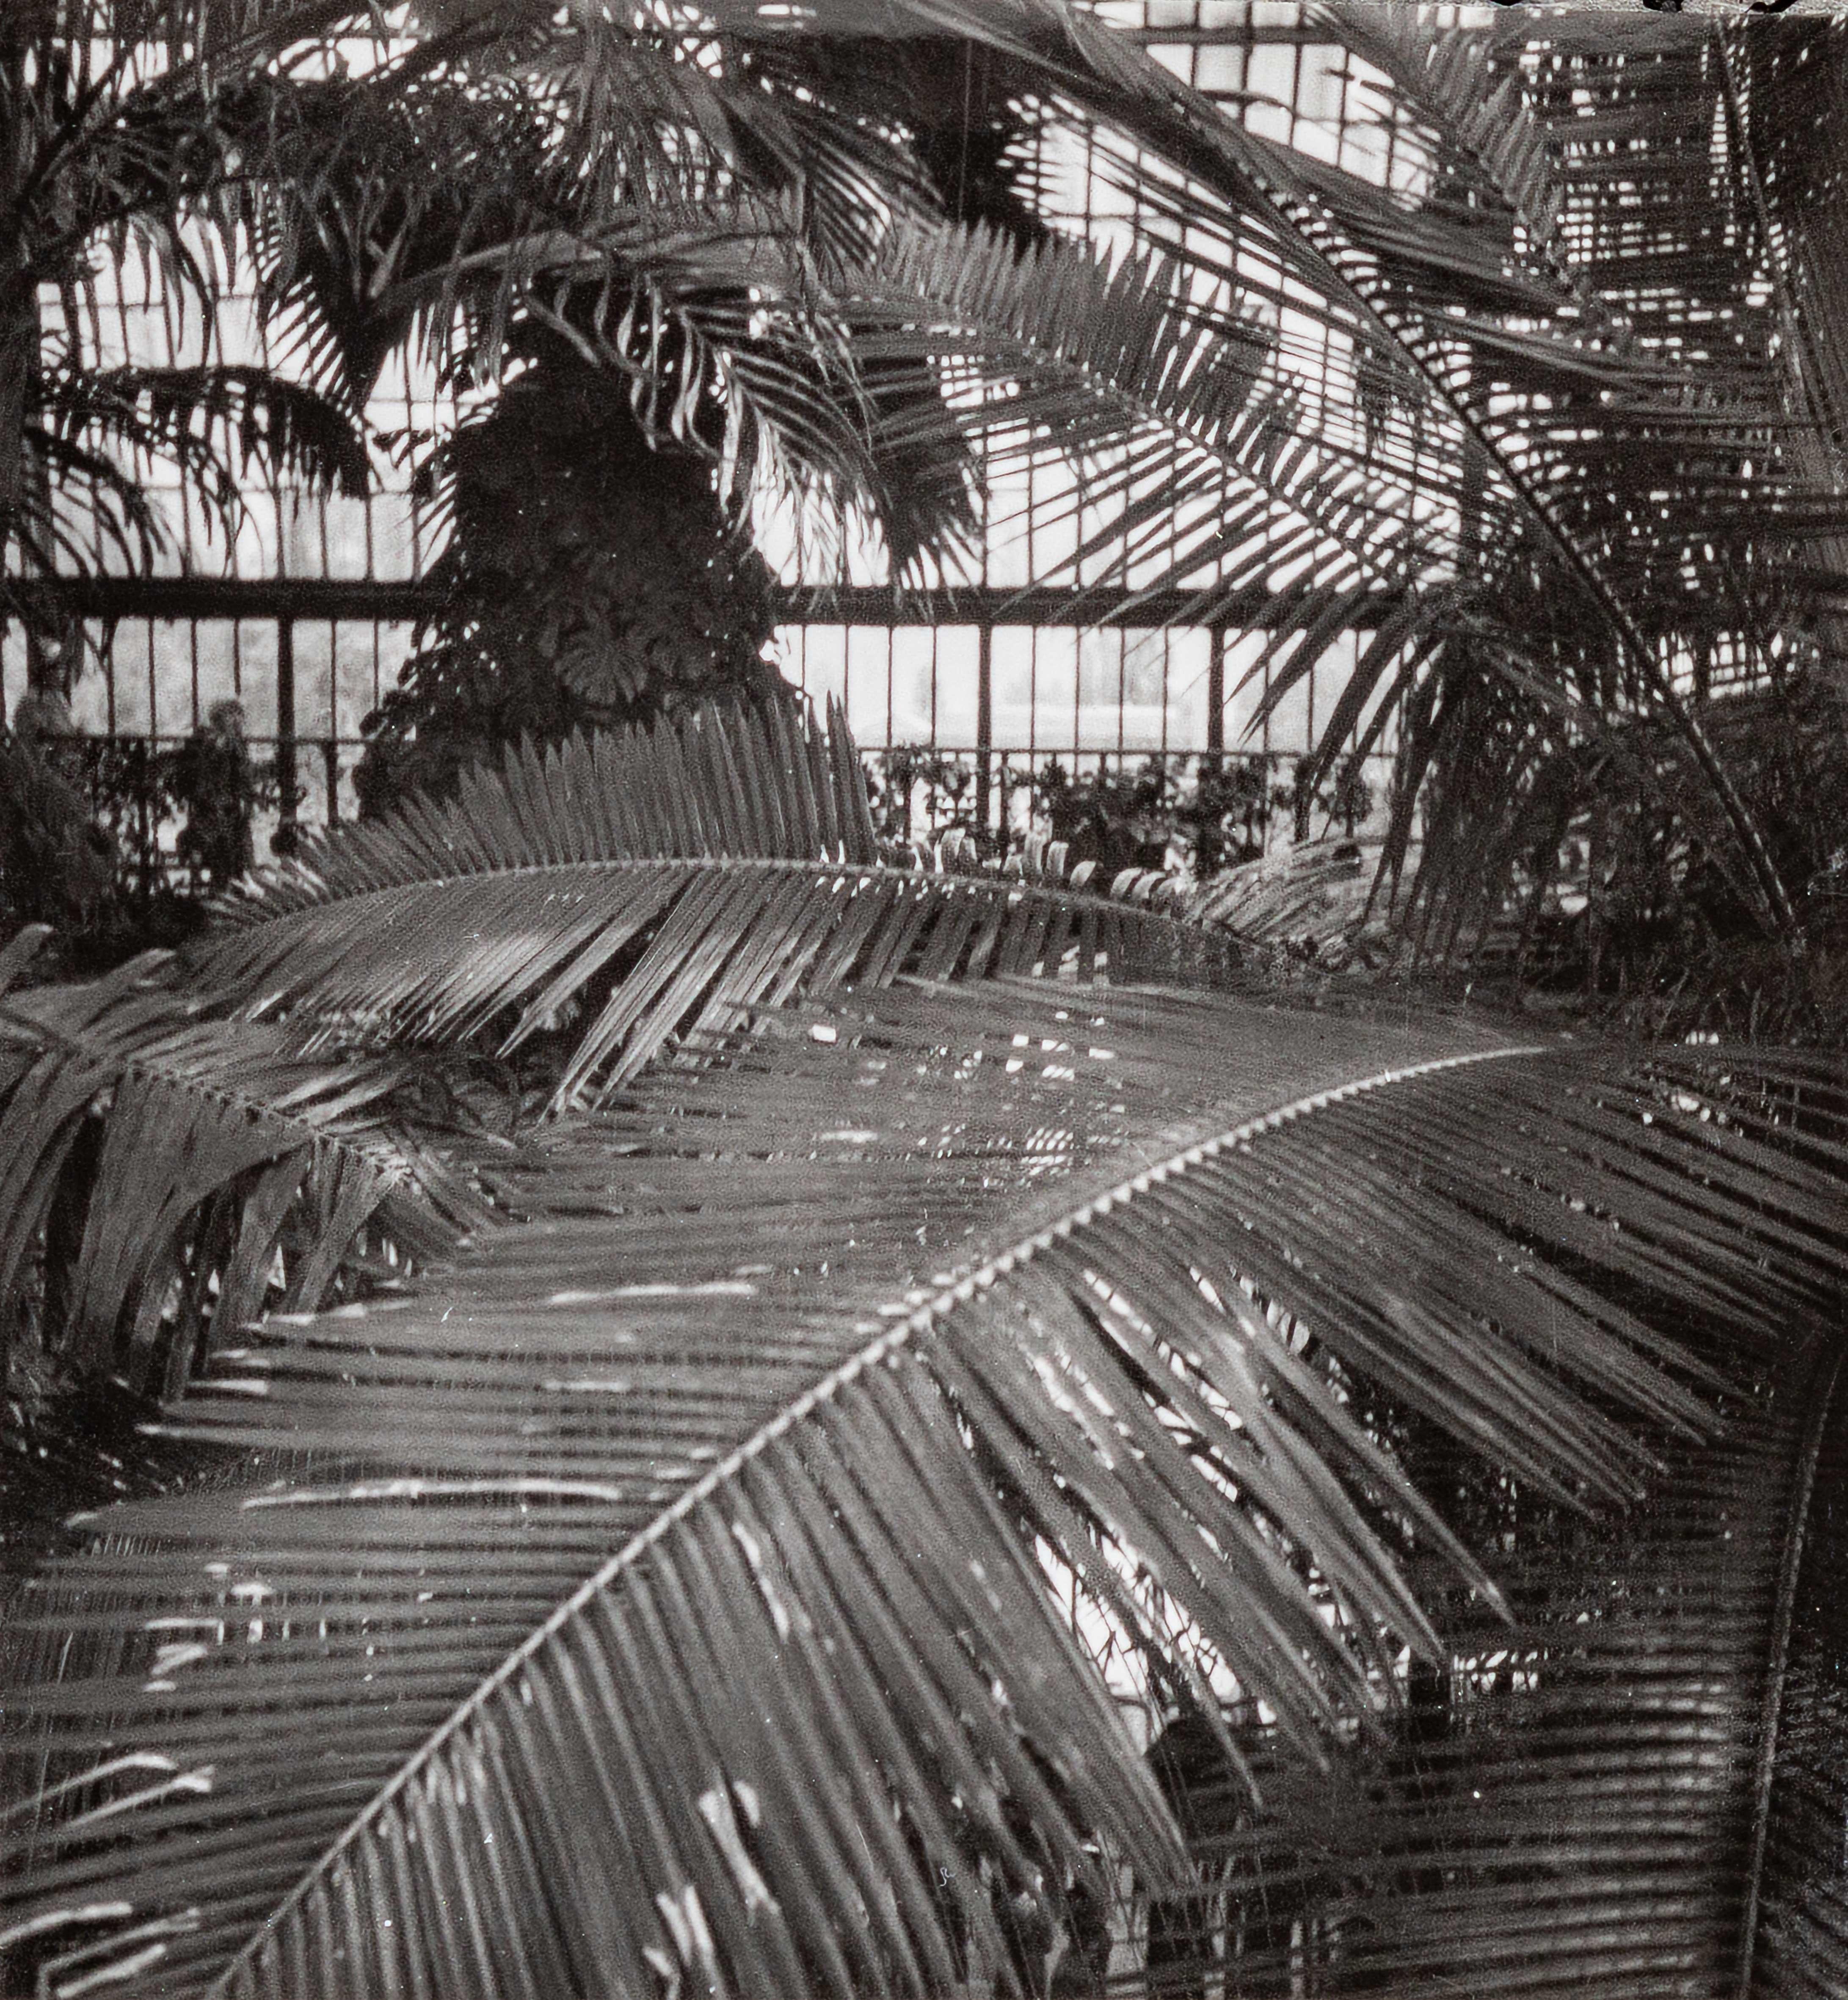 Dora Maar Black and White Photograph - Interior of a Greenhouse at Kew Gardens, London